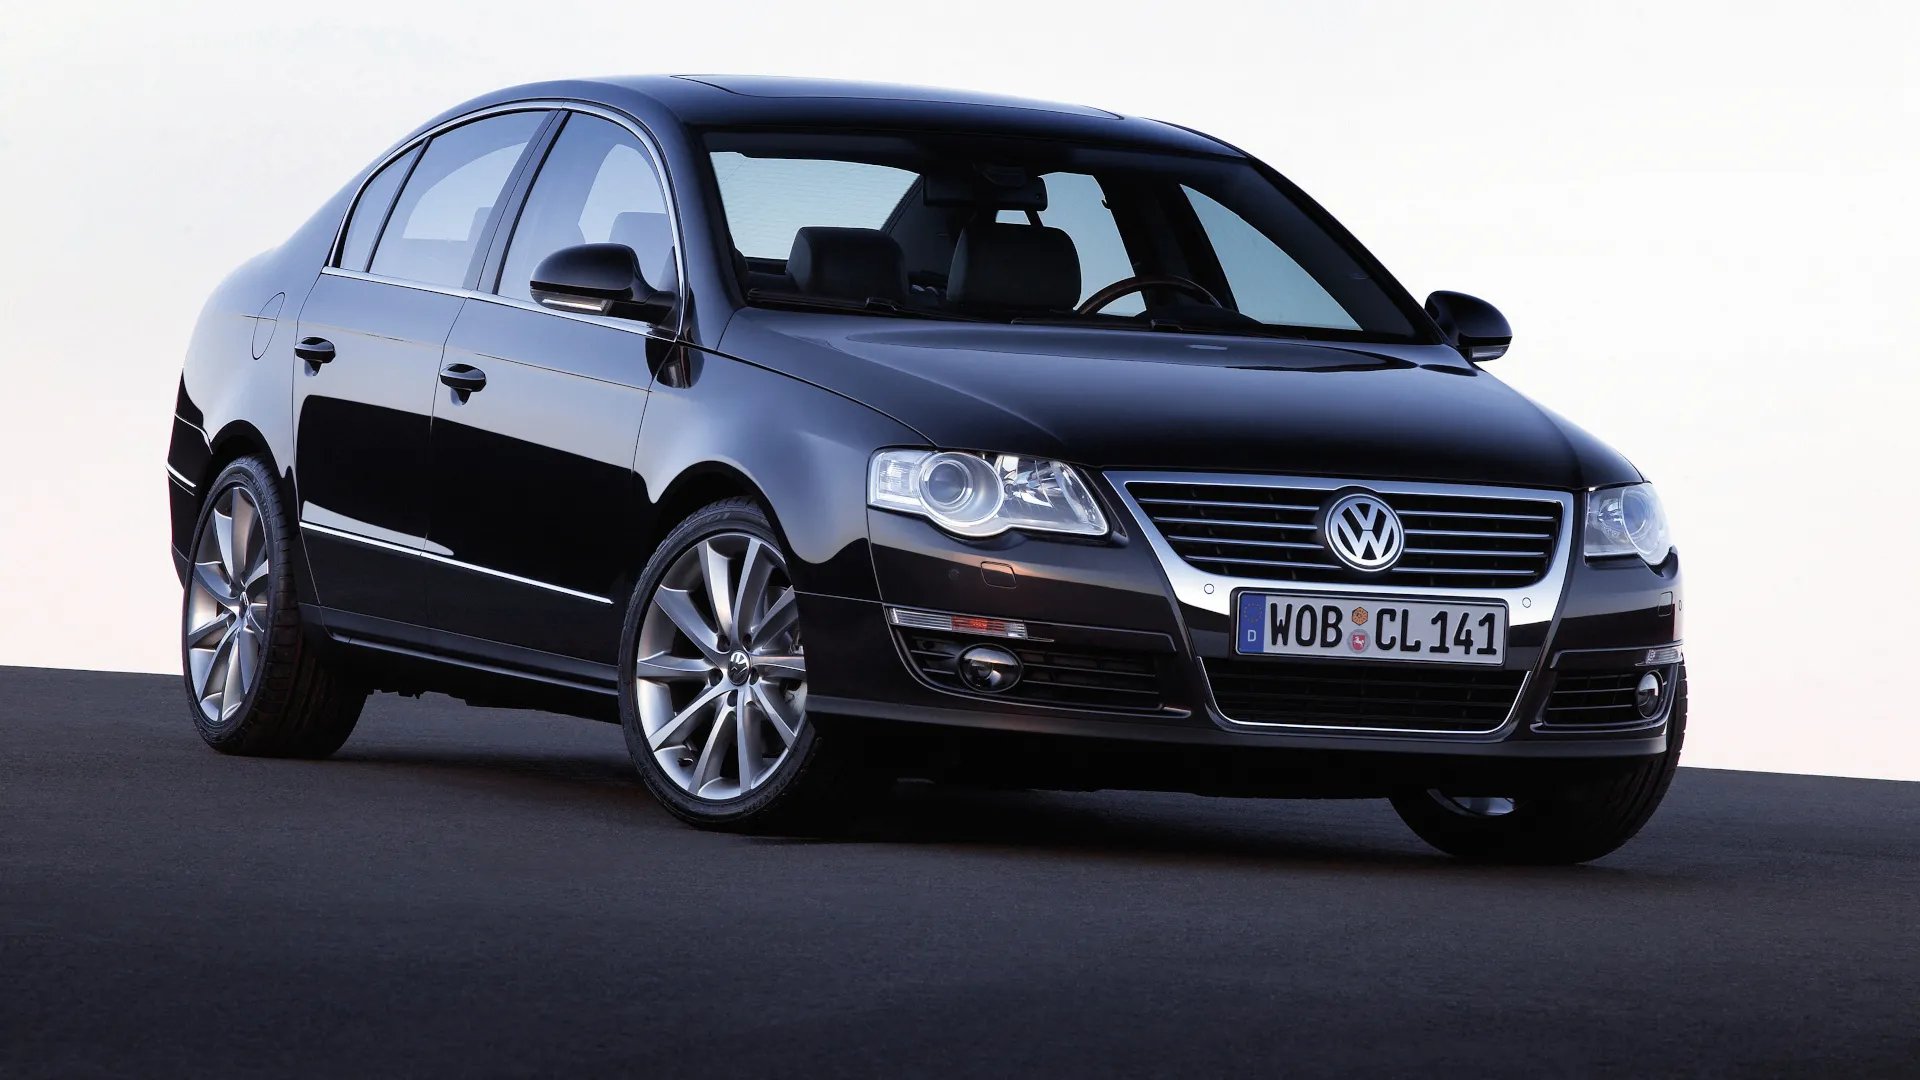 Coche del día: Volkswagen Passat 2.0 TDI (B6)